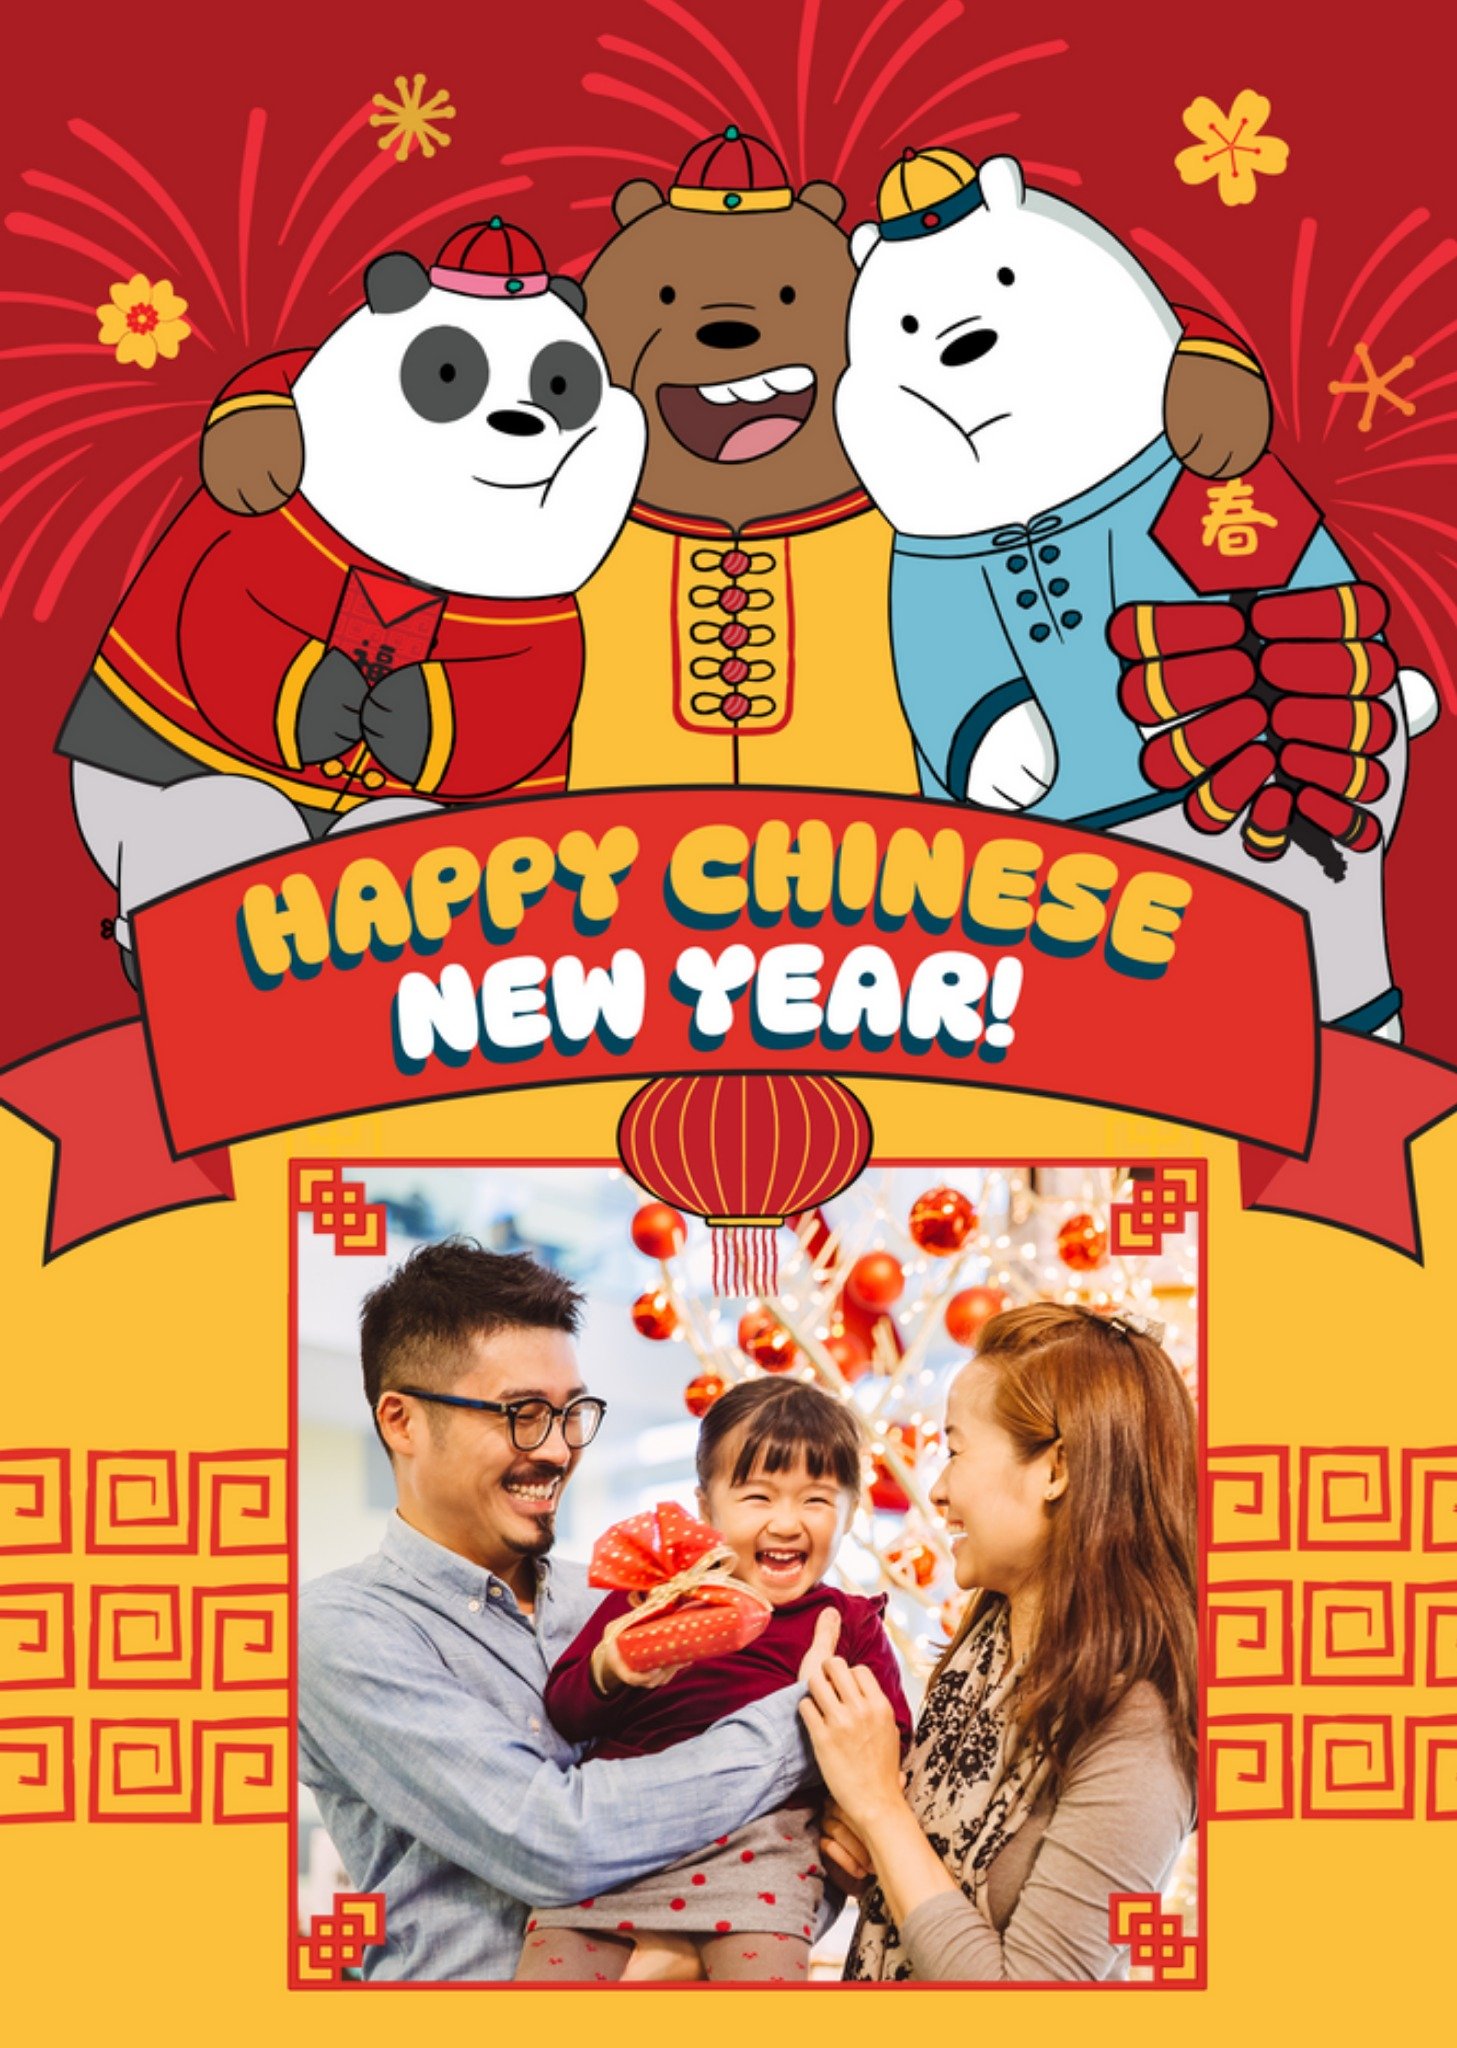 Moonpig We Bare Bears Happy Chinese New Year Photo Upload Card, Large